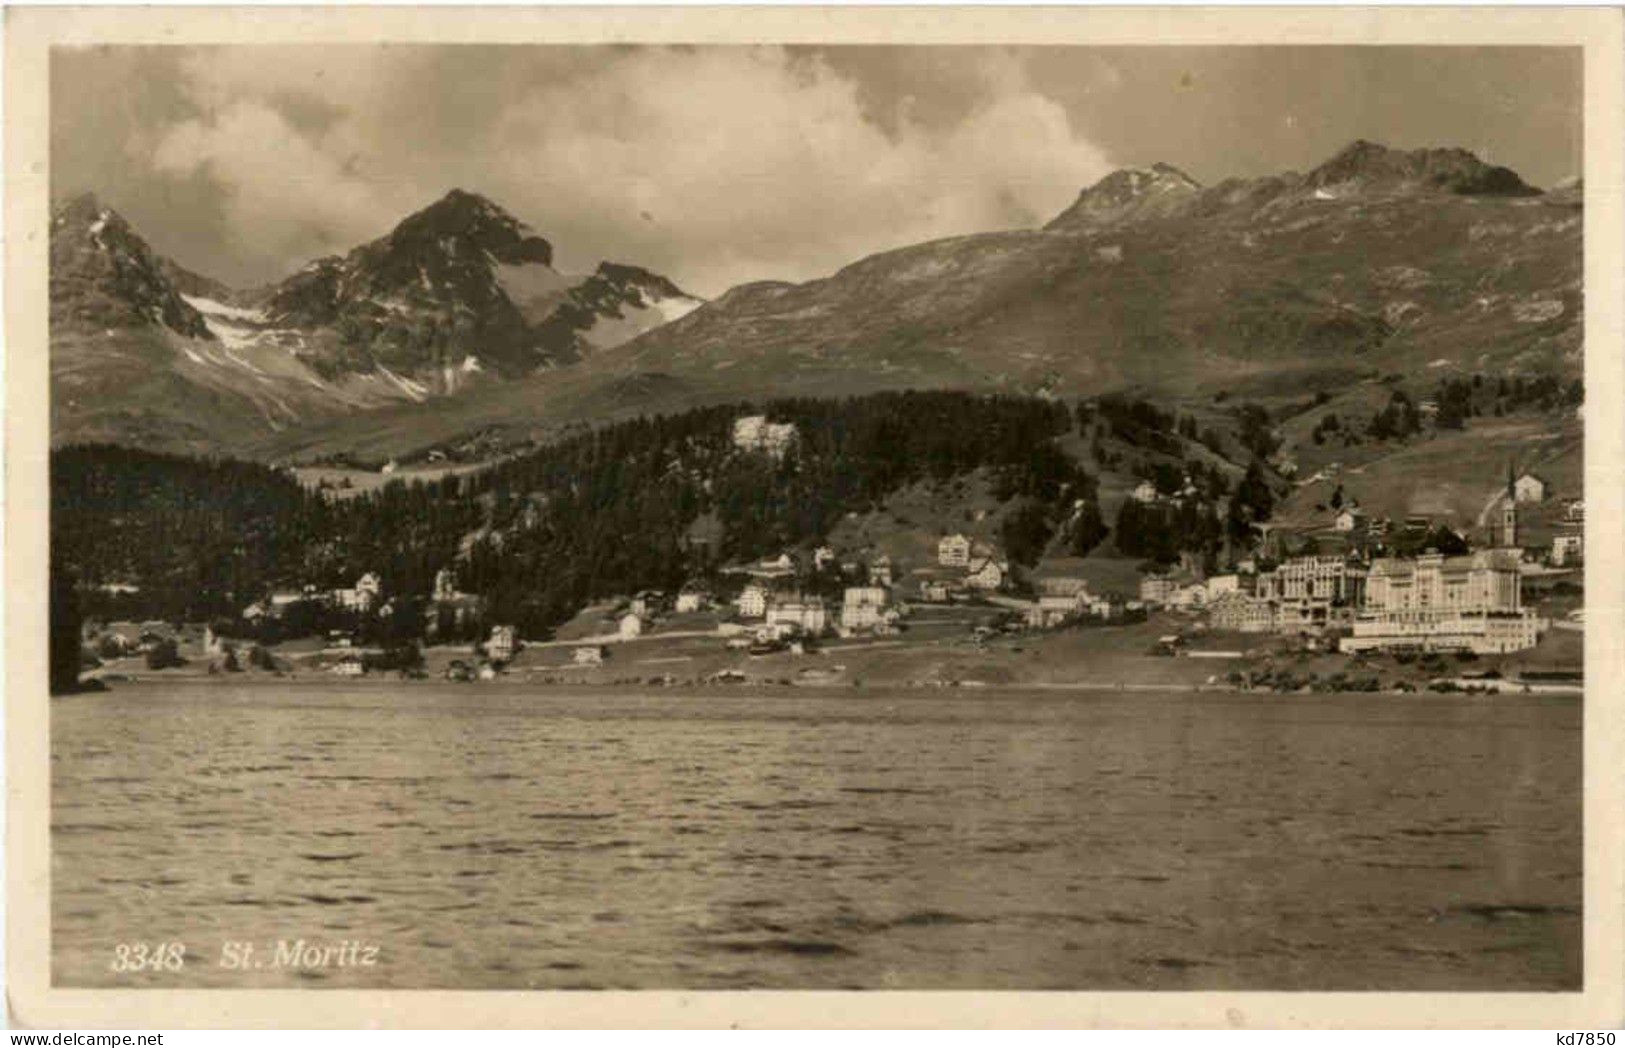 St. Moritz - Saint-Moritz